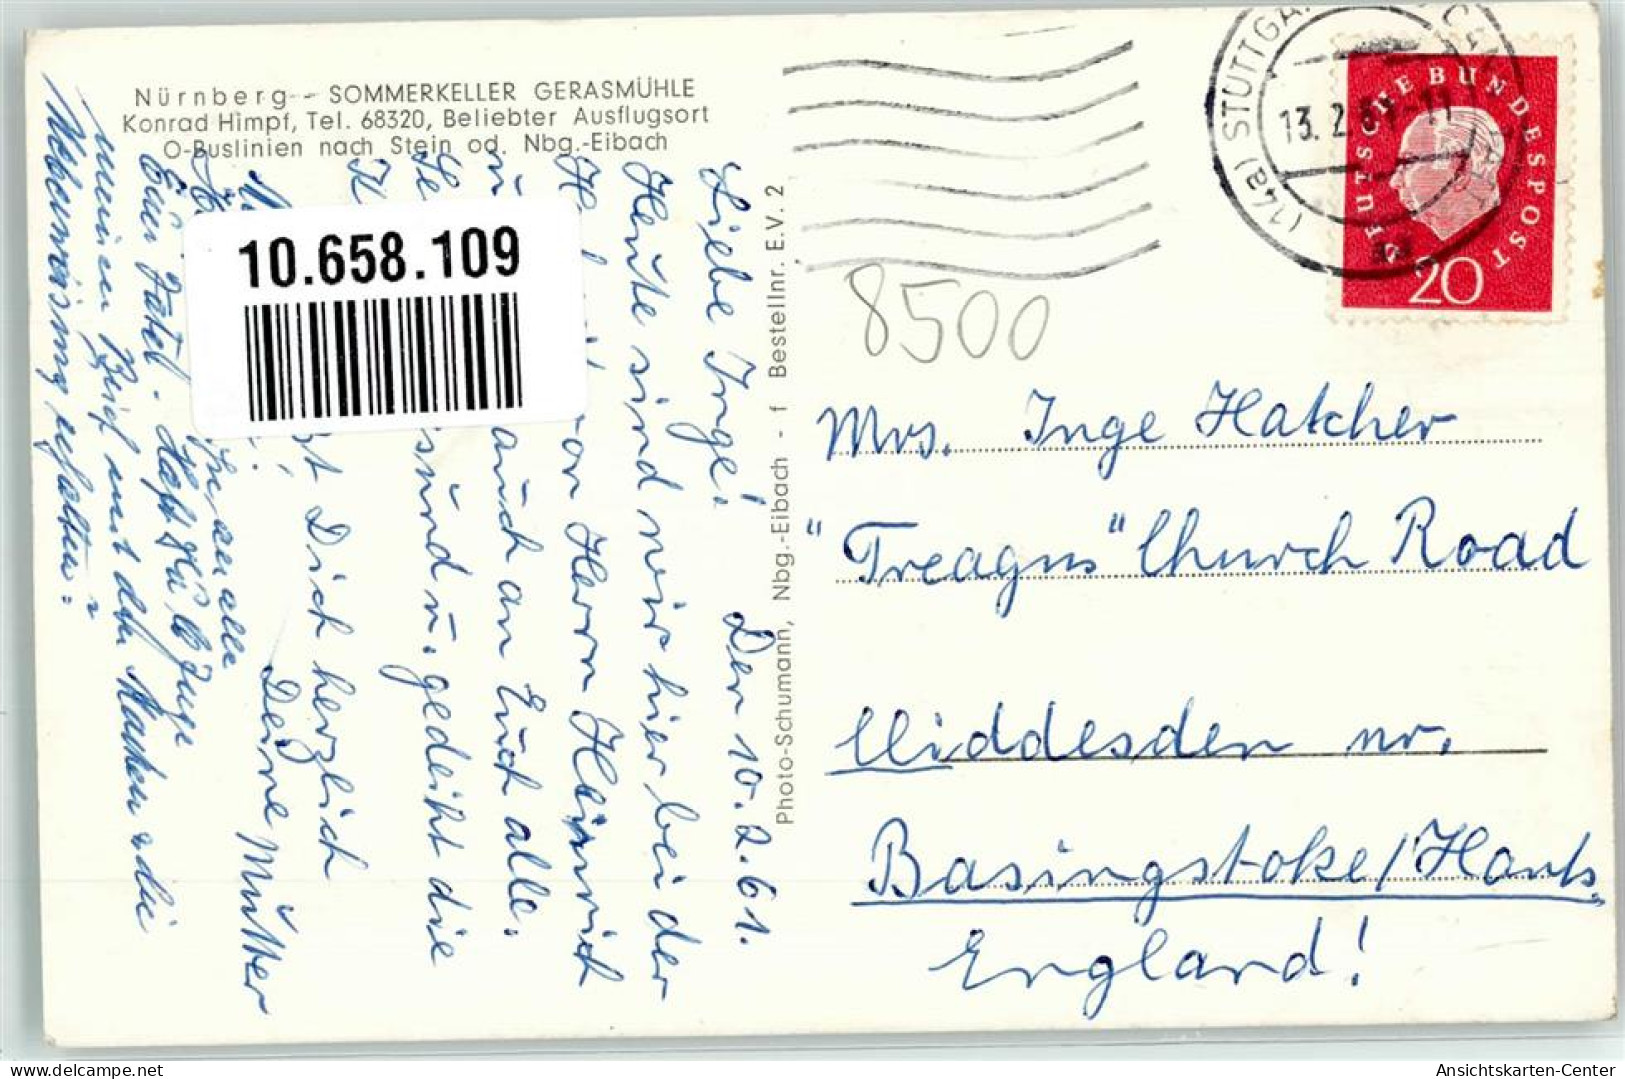 10658109 - Nuernberg - Nürnberg